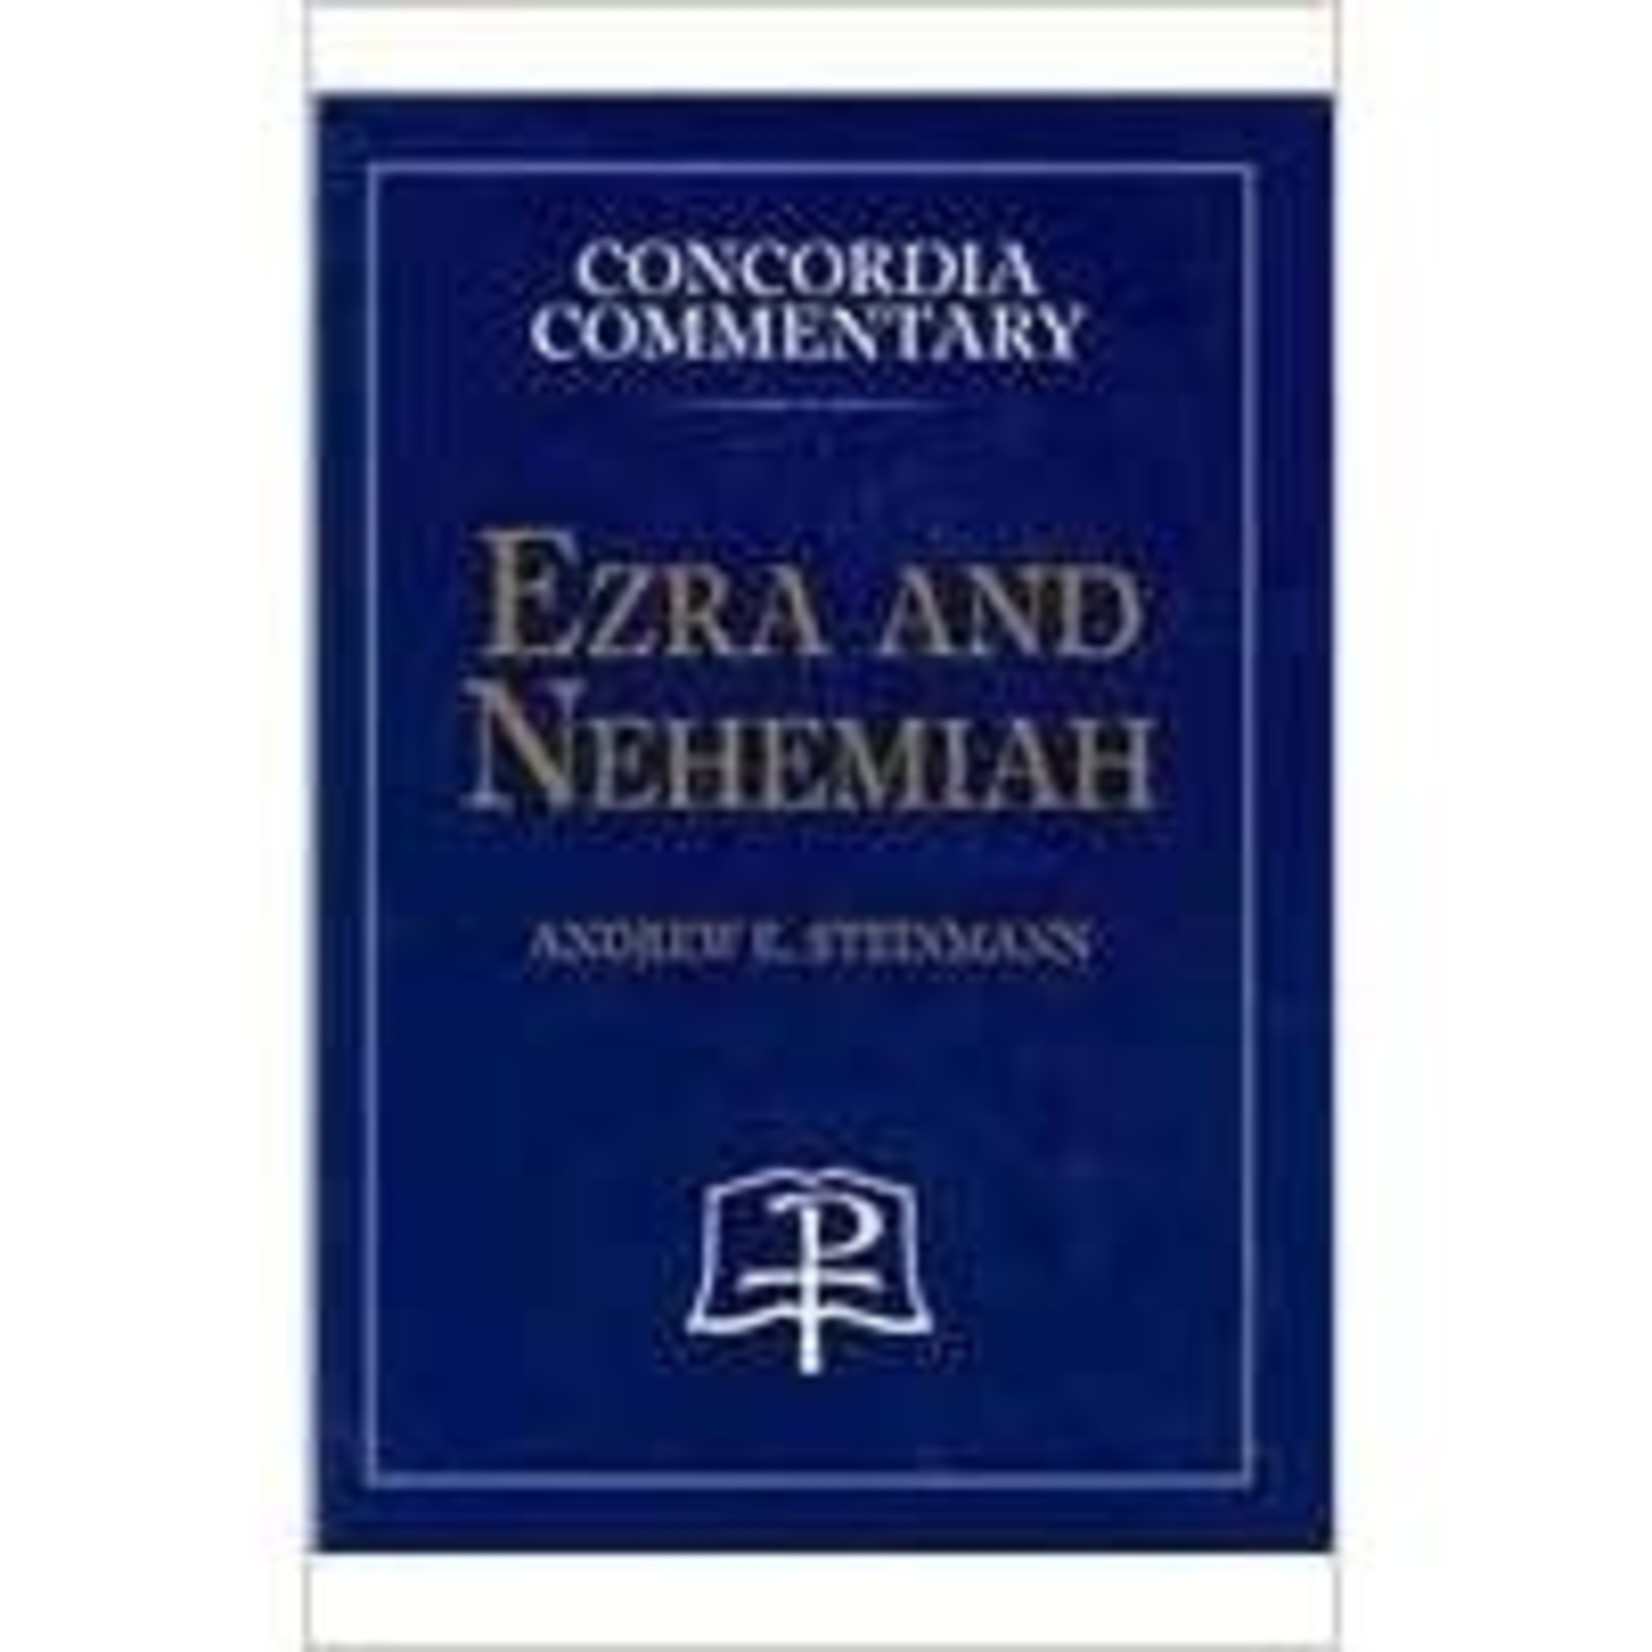 Concordia Commentary - Ezra and Nehemiah